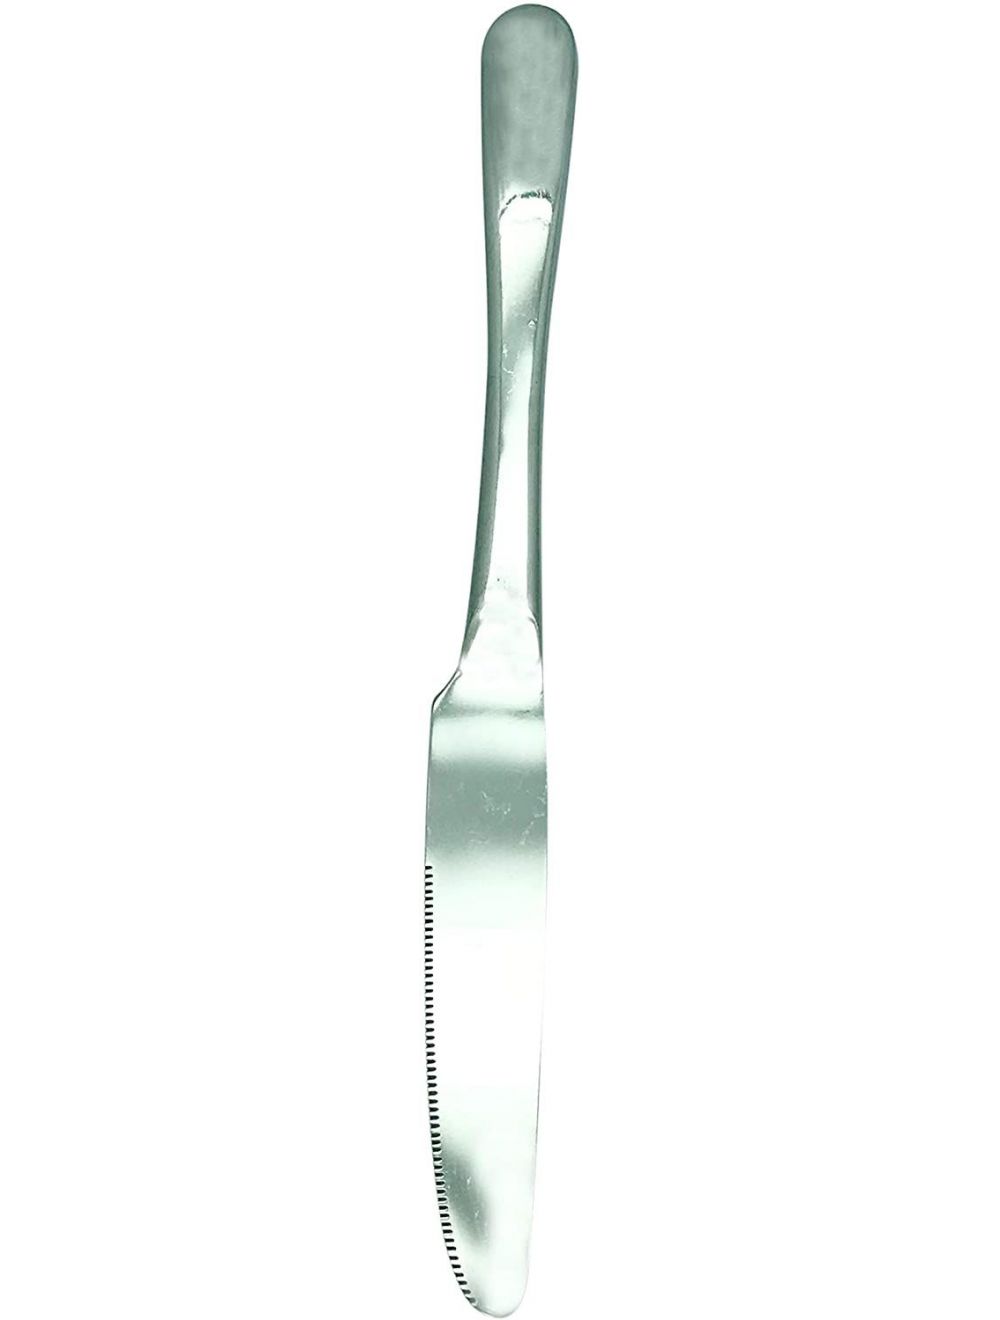 Raj Cuisine Desert Knife Set, Silver, 20cm, PC0012, 6Pcs